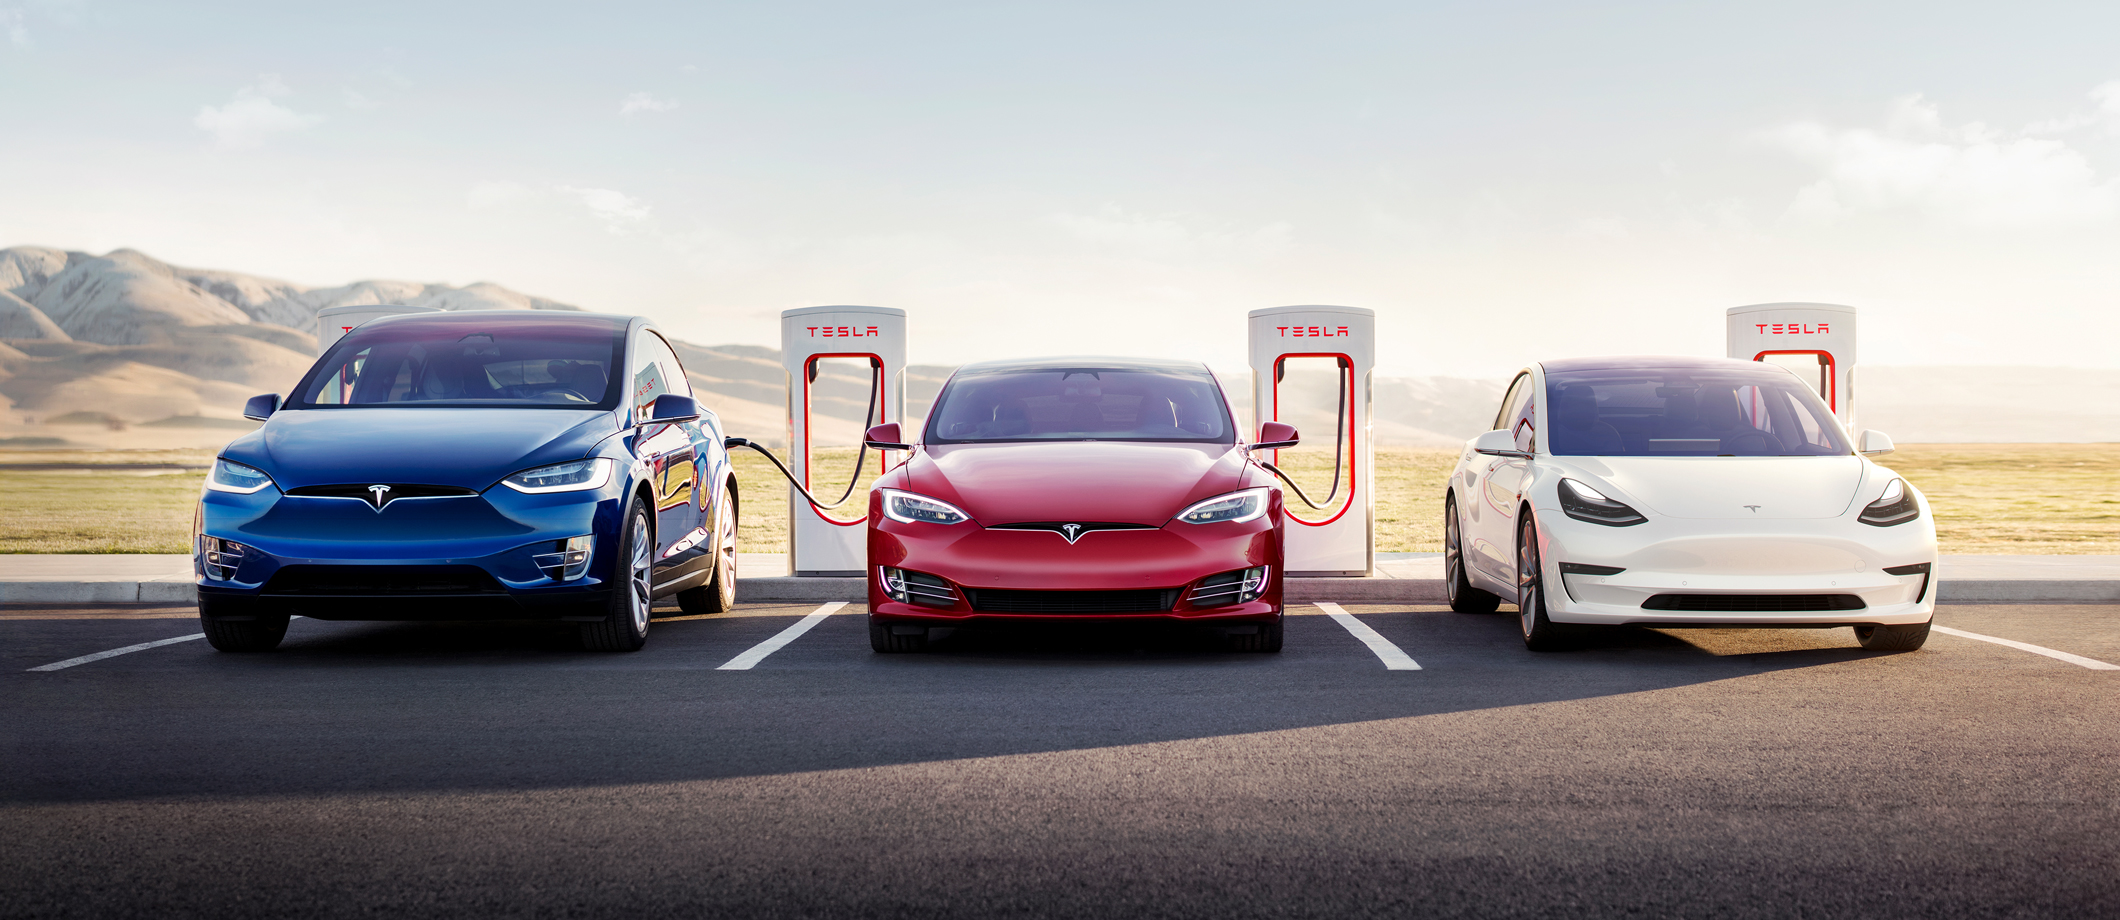 Tesla 全車系於 V3 超級充電站充電皆可享有更高效的充電體驗.jpg